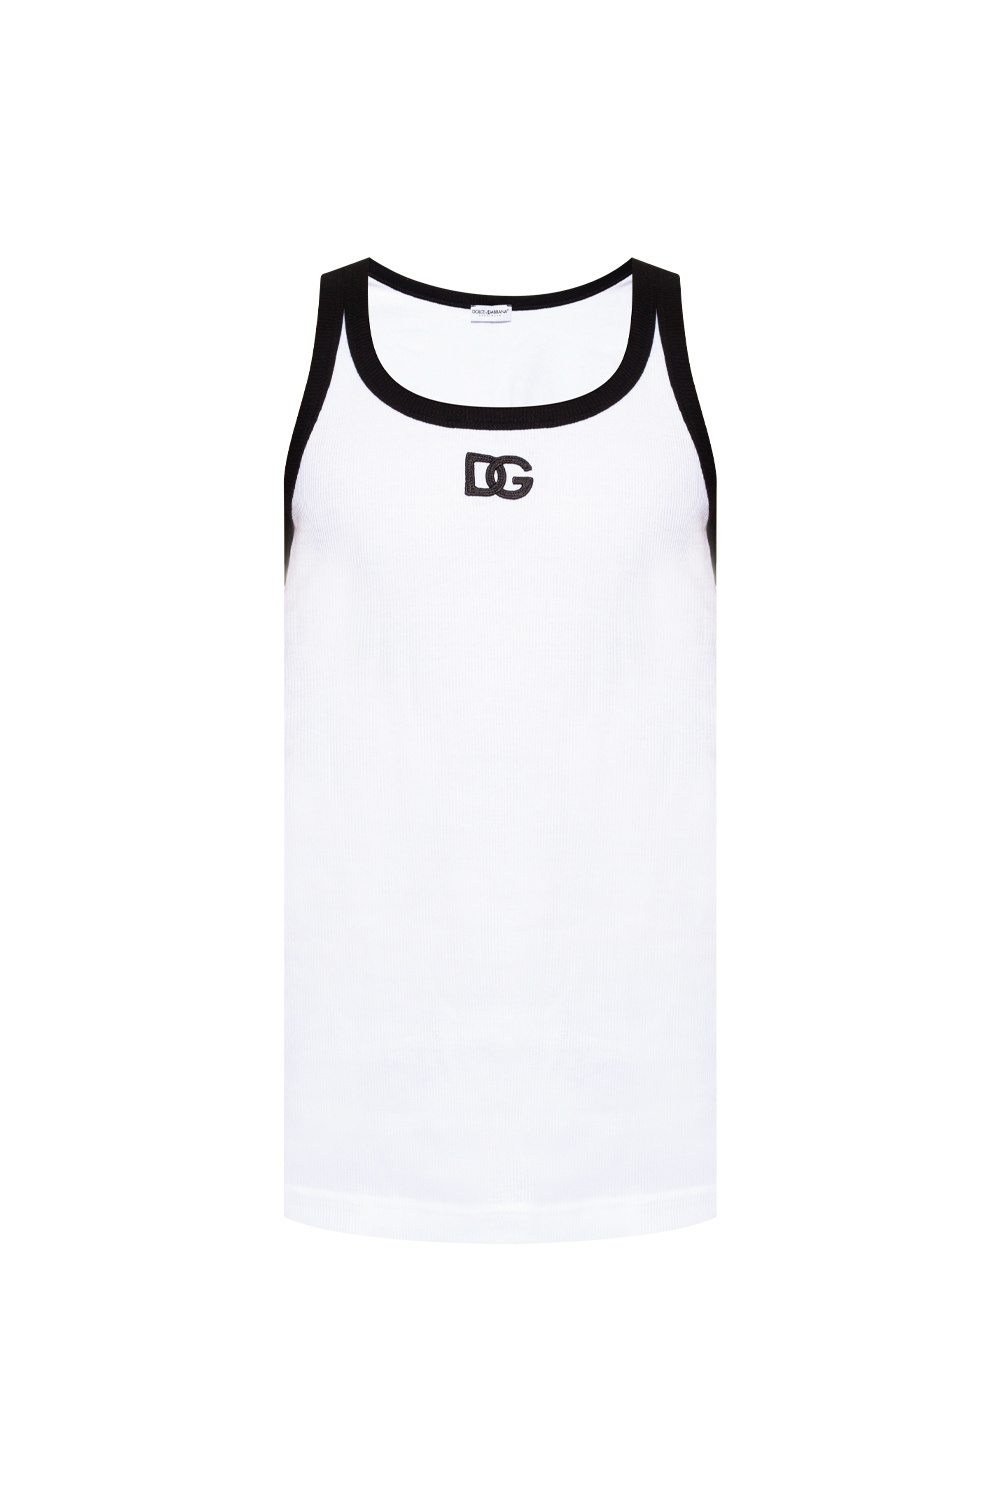 shirt Dolce & Gabbana - dolce & gabbana white sleeveless blouse - IetpShops  Australia - Sleeveless T